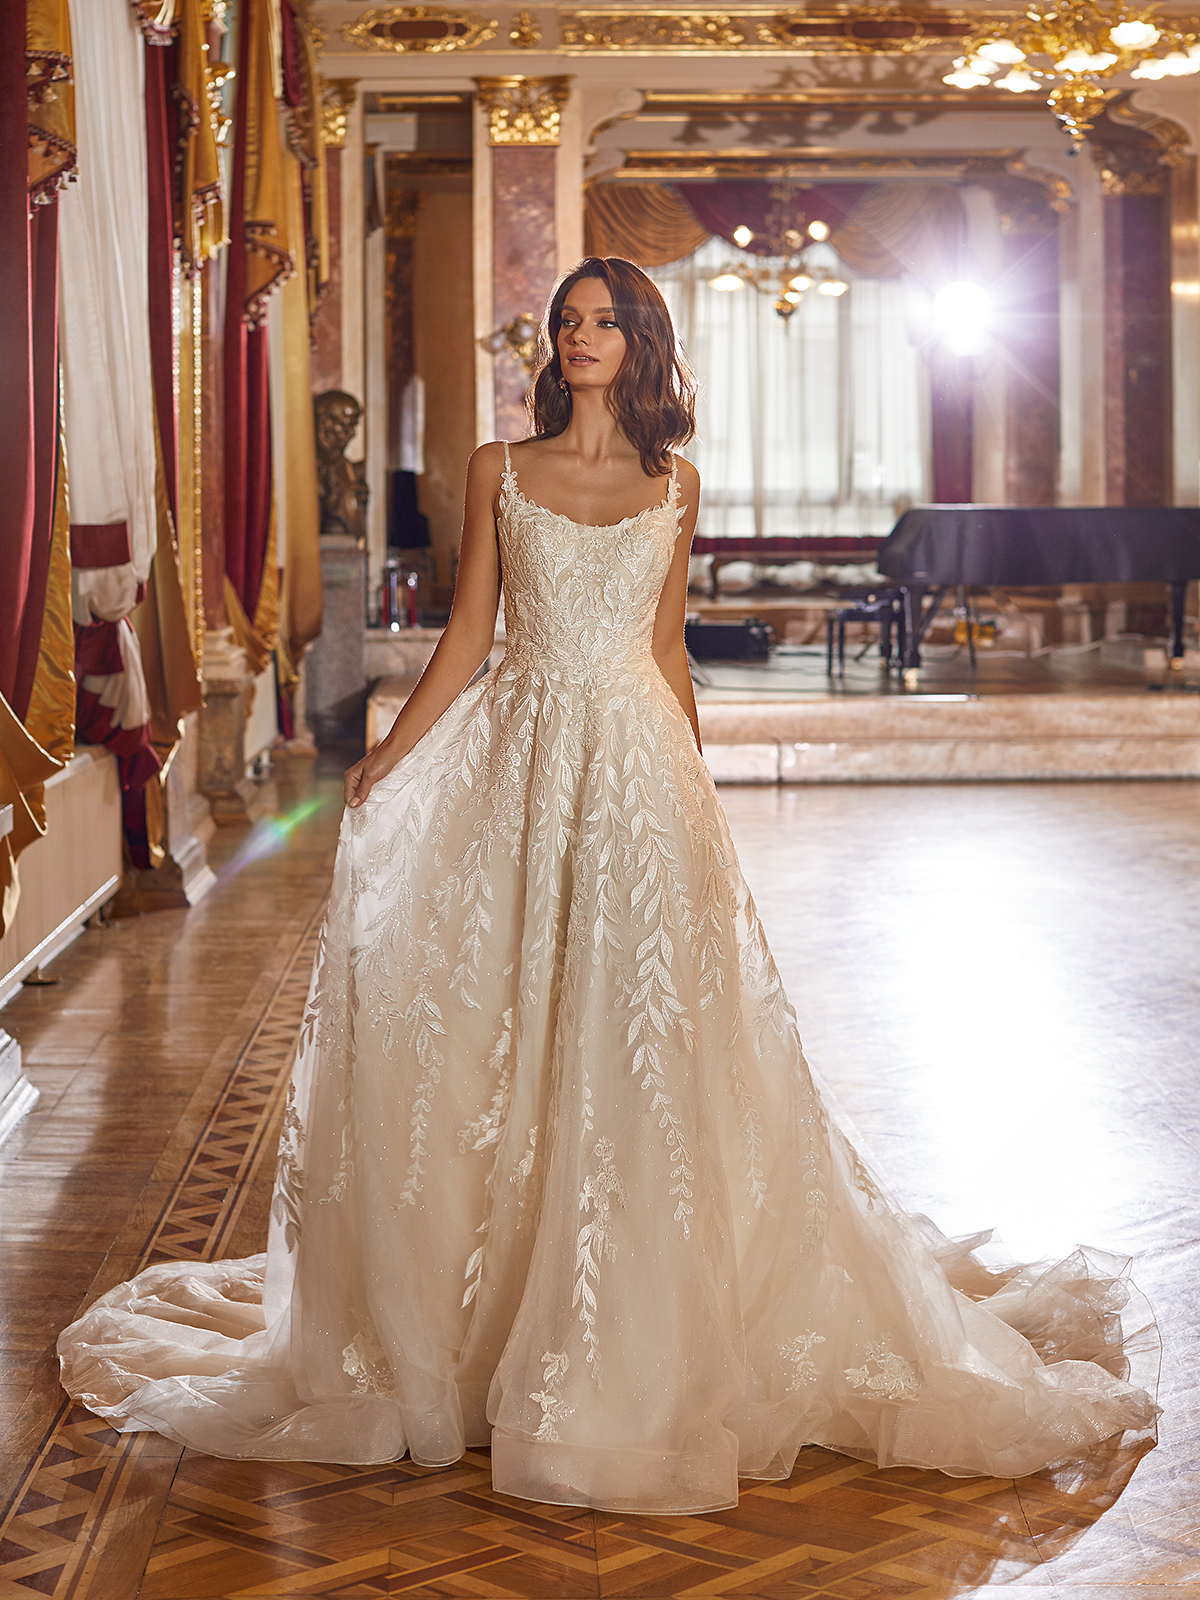 A truly unforgettable wedding gown ✨ #dress #wedding #bridallook  #unqiuedress #beautiful #fashion #gown #brides #albanian #design… |  Instagram